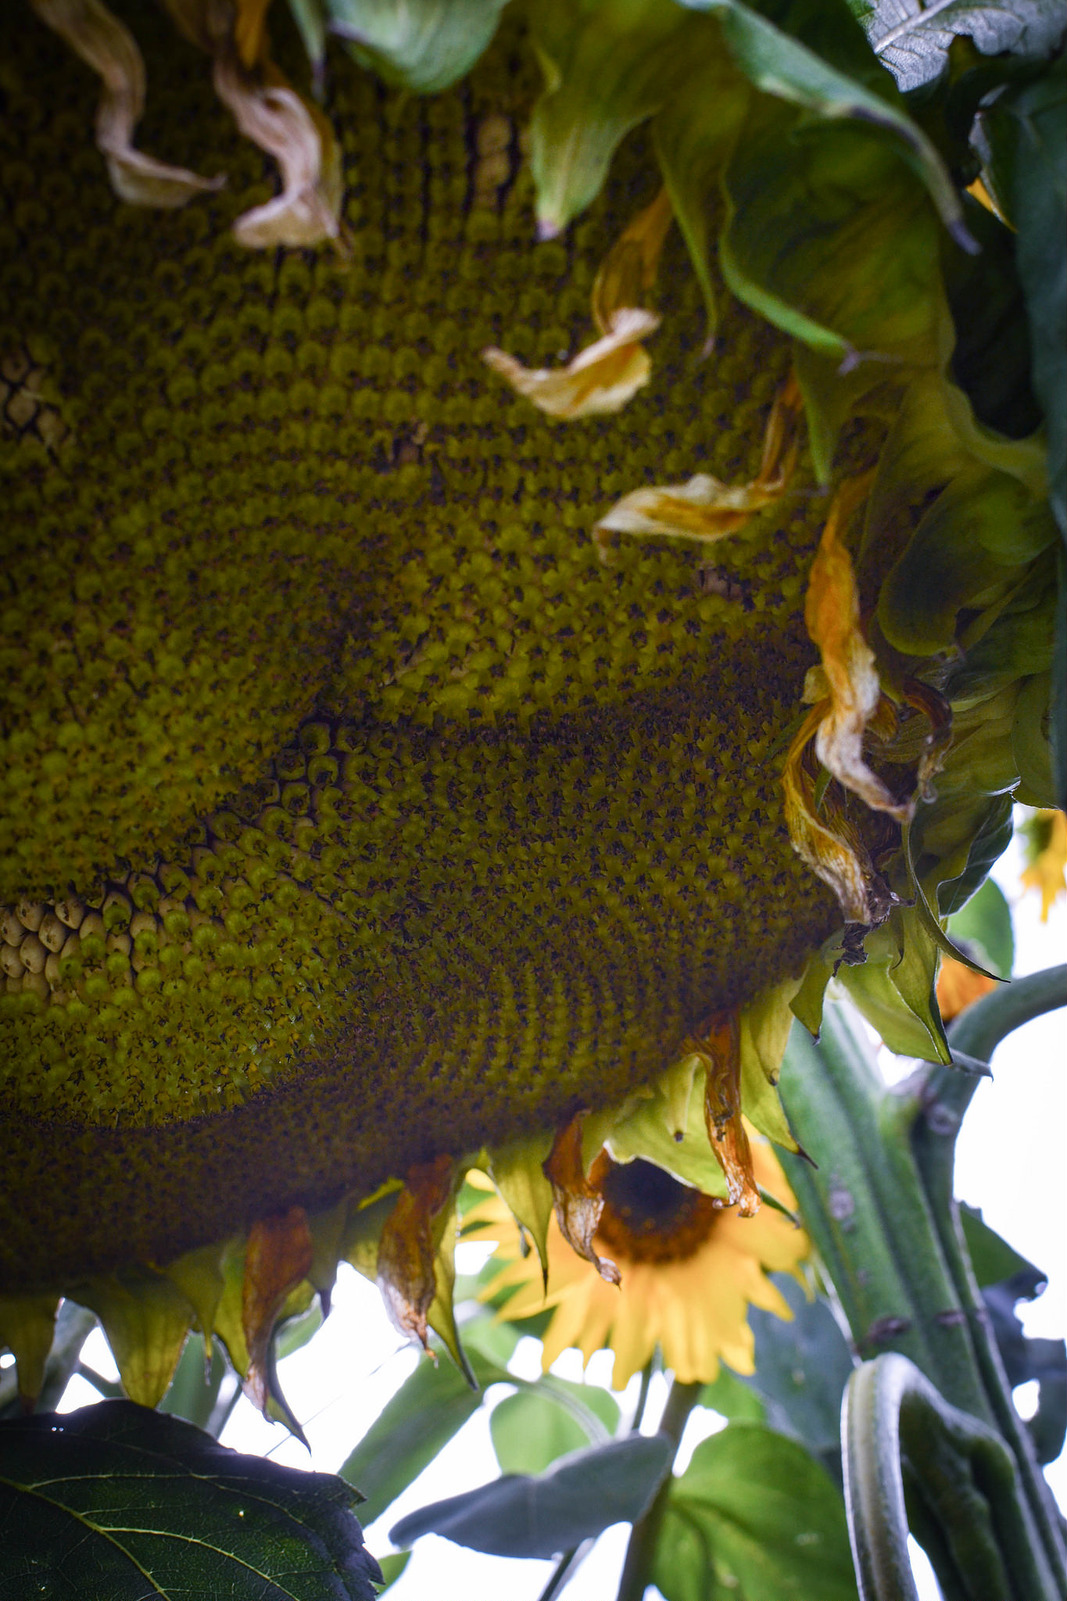 Giant sunflower head